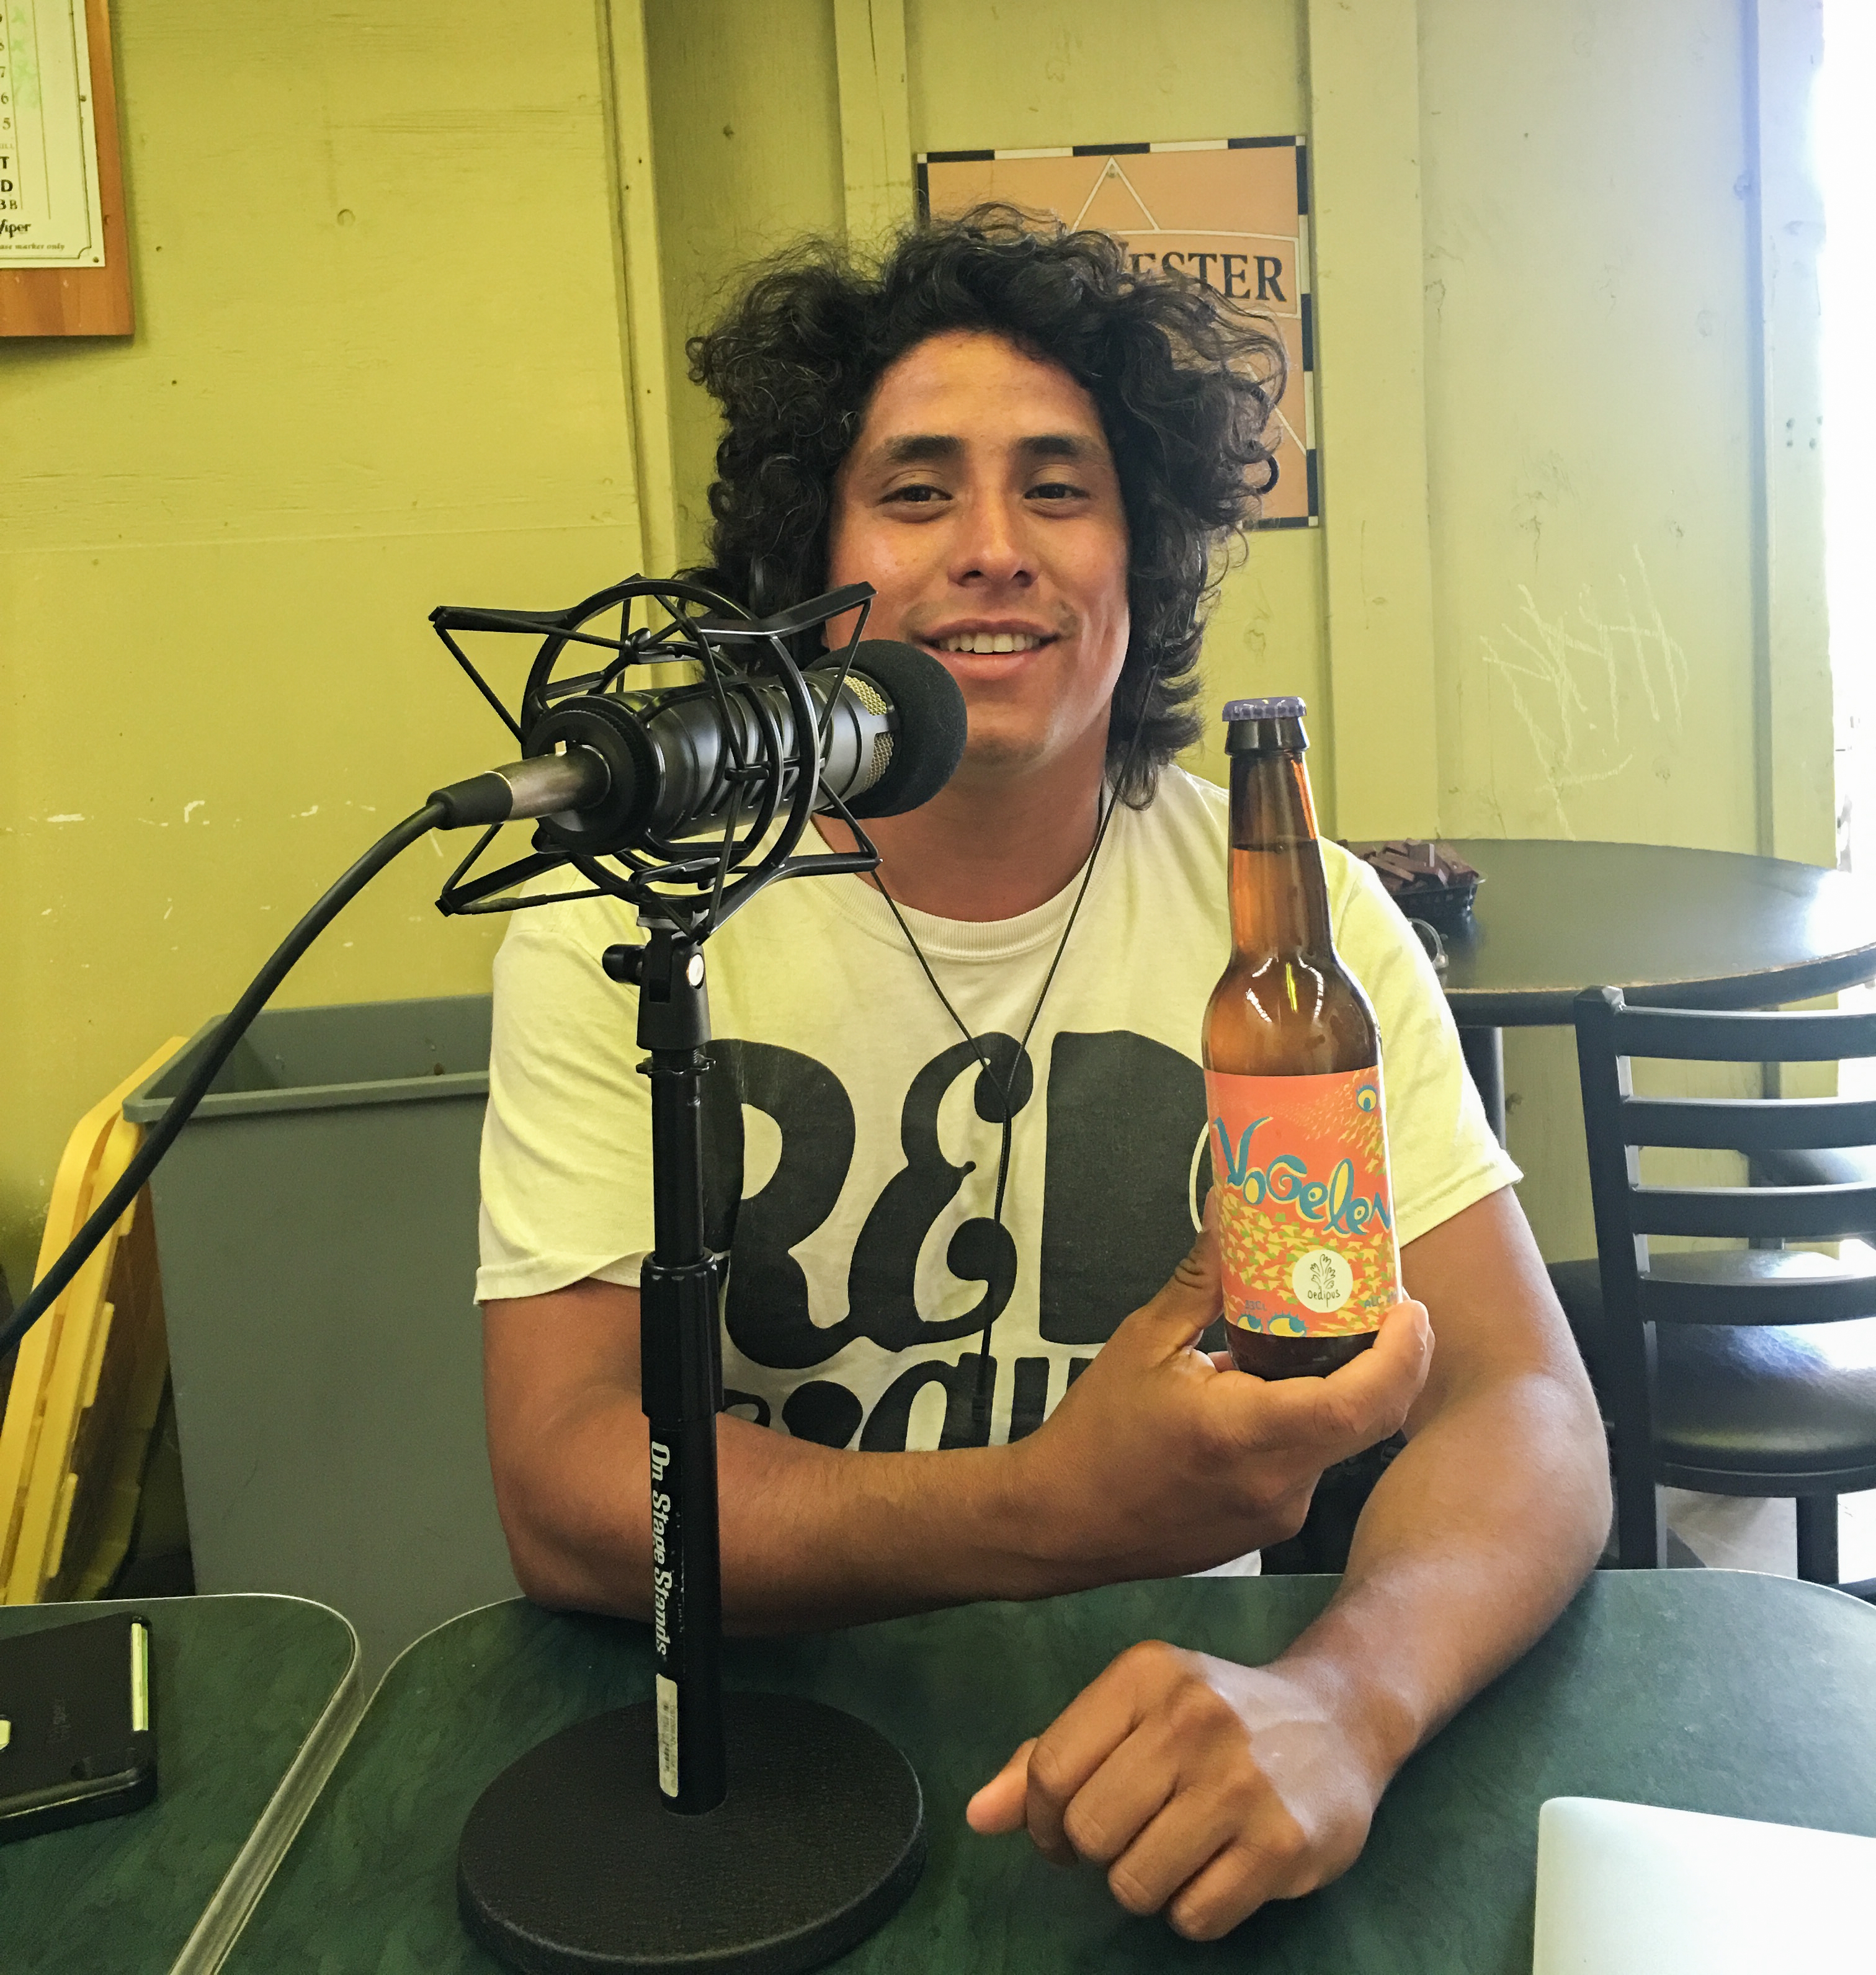 Rick Nelson Oedipus Brewing - Portland Beer Podcast episode 75 by Steven Shomler